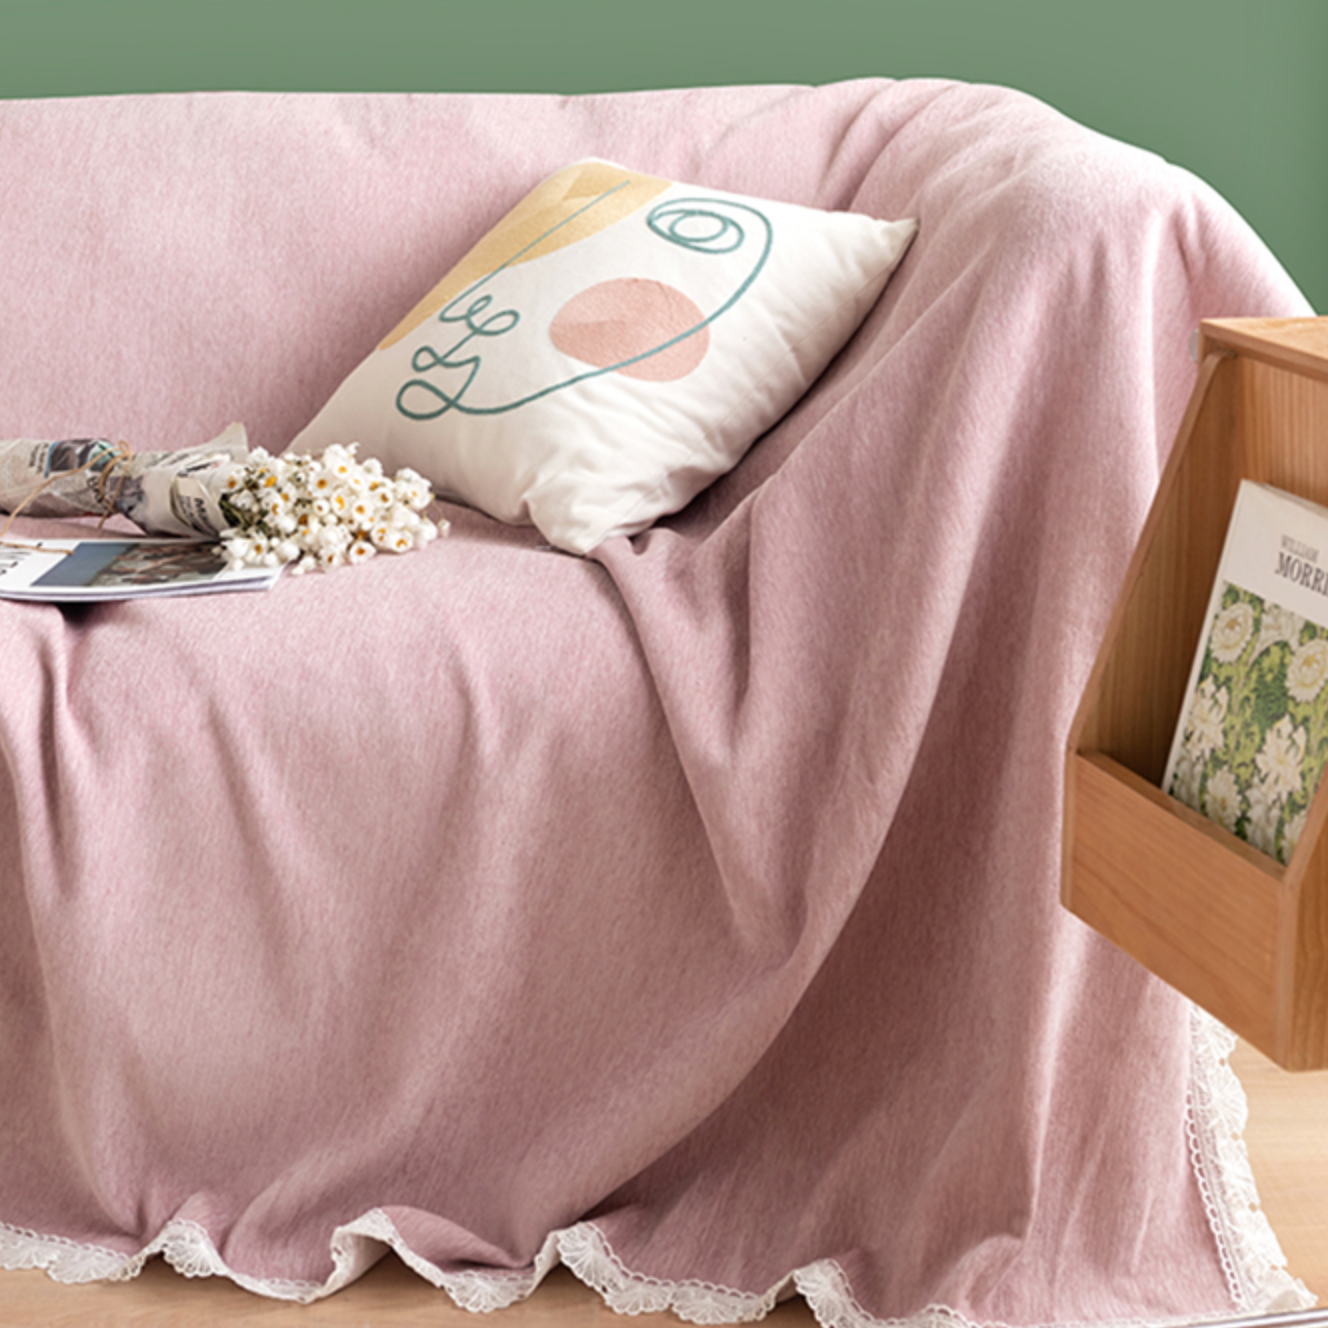 10color towel sofa cover